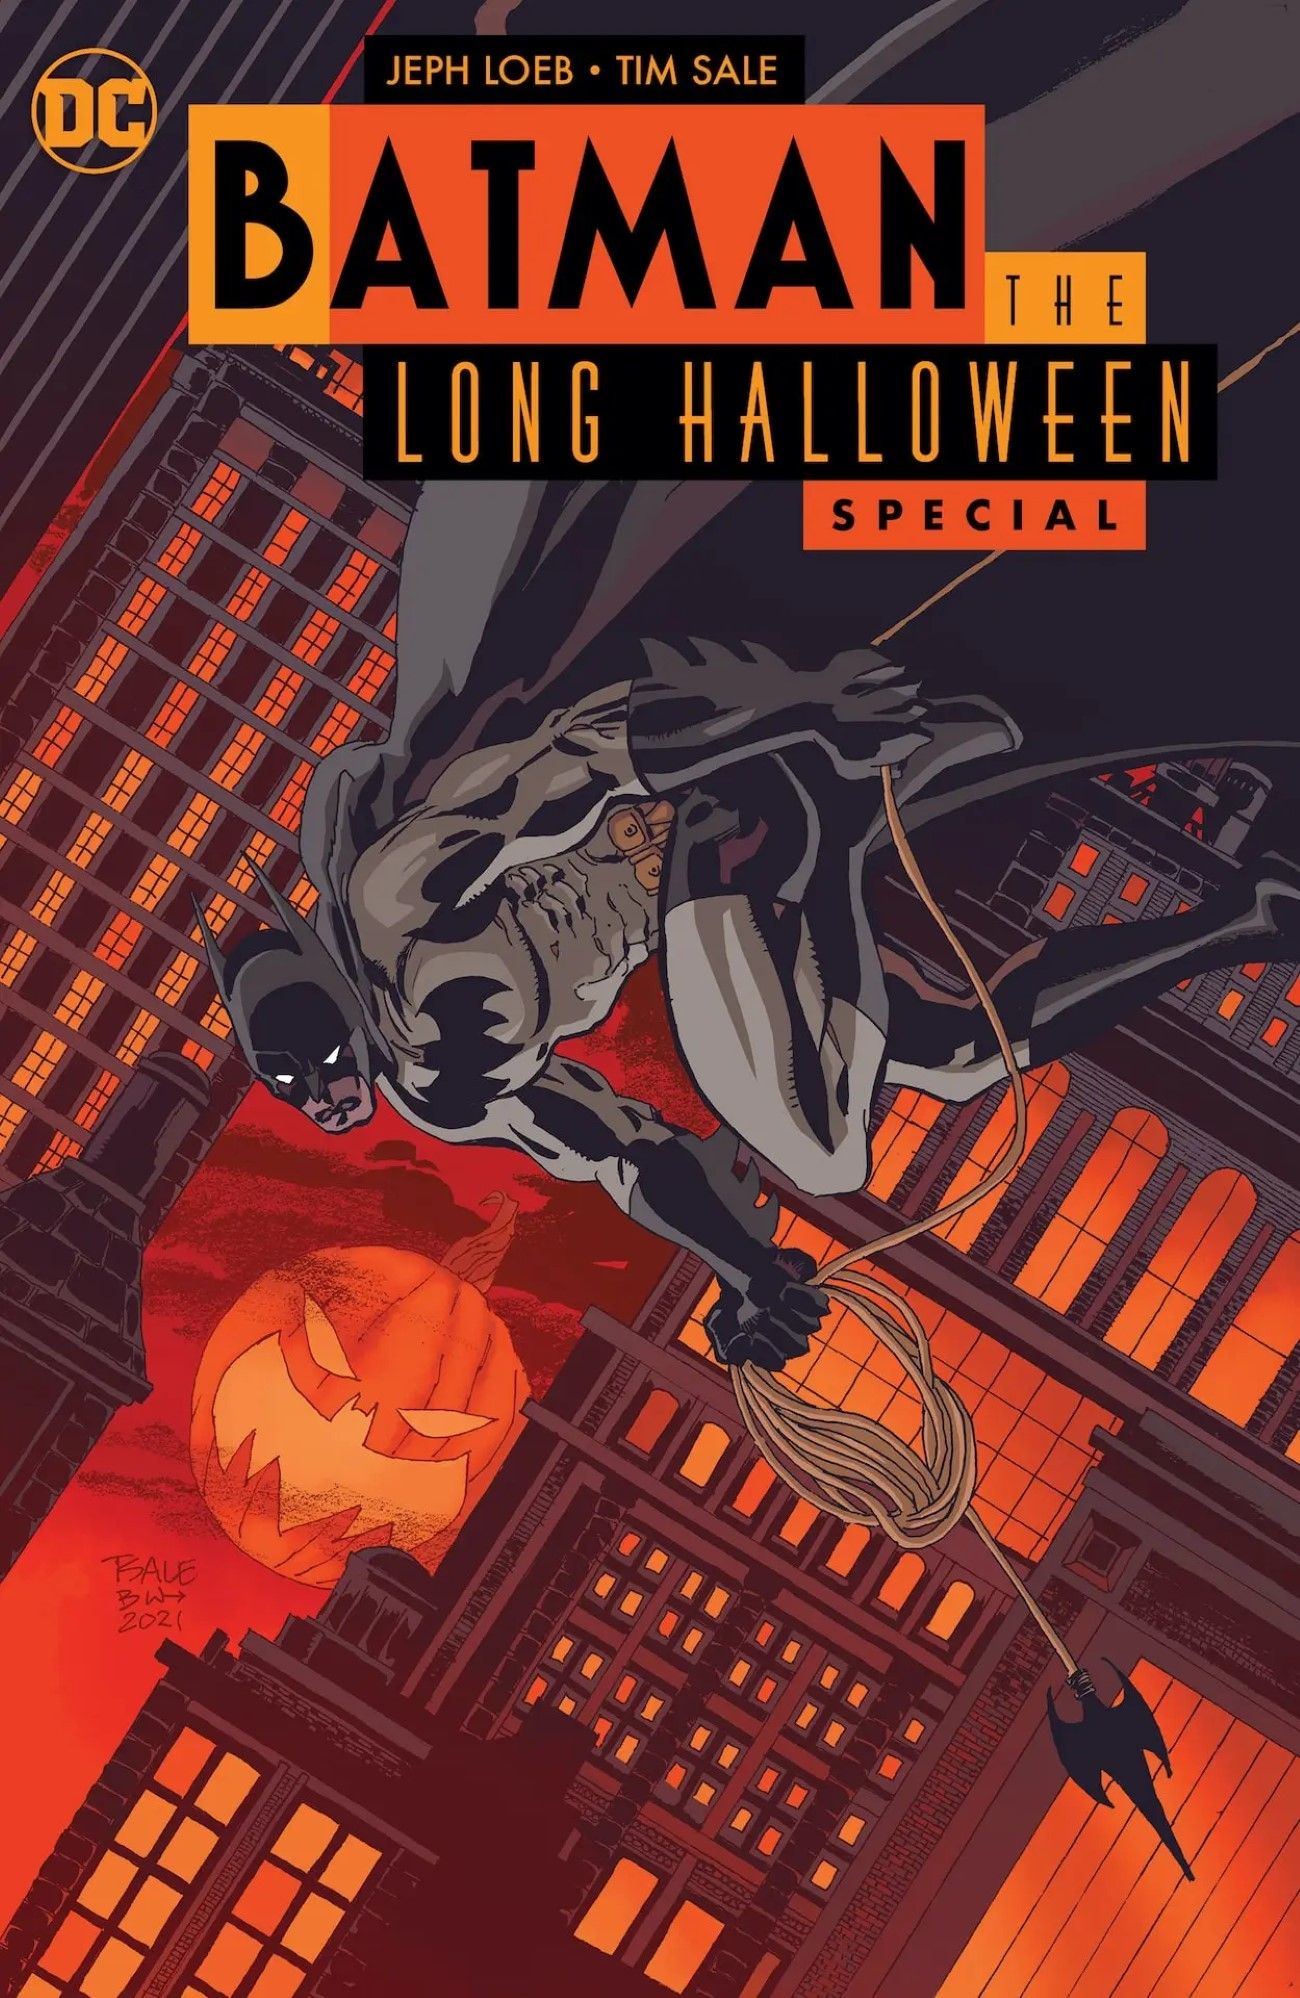 Batman Long Halloween Special Cover Art